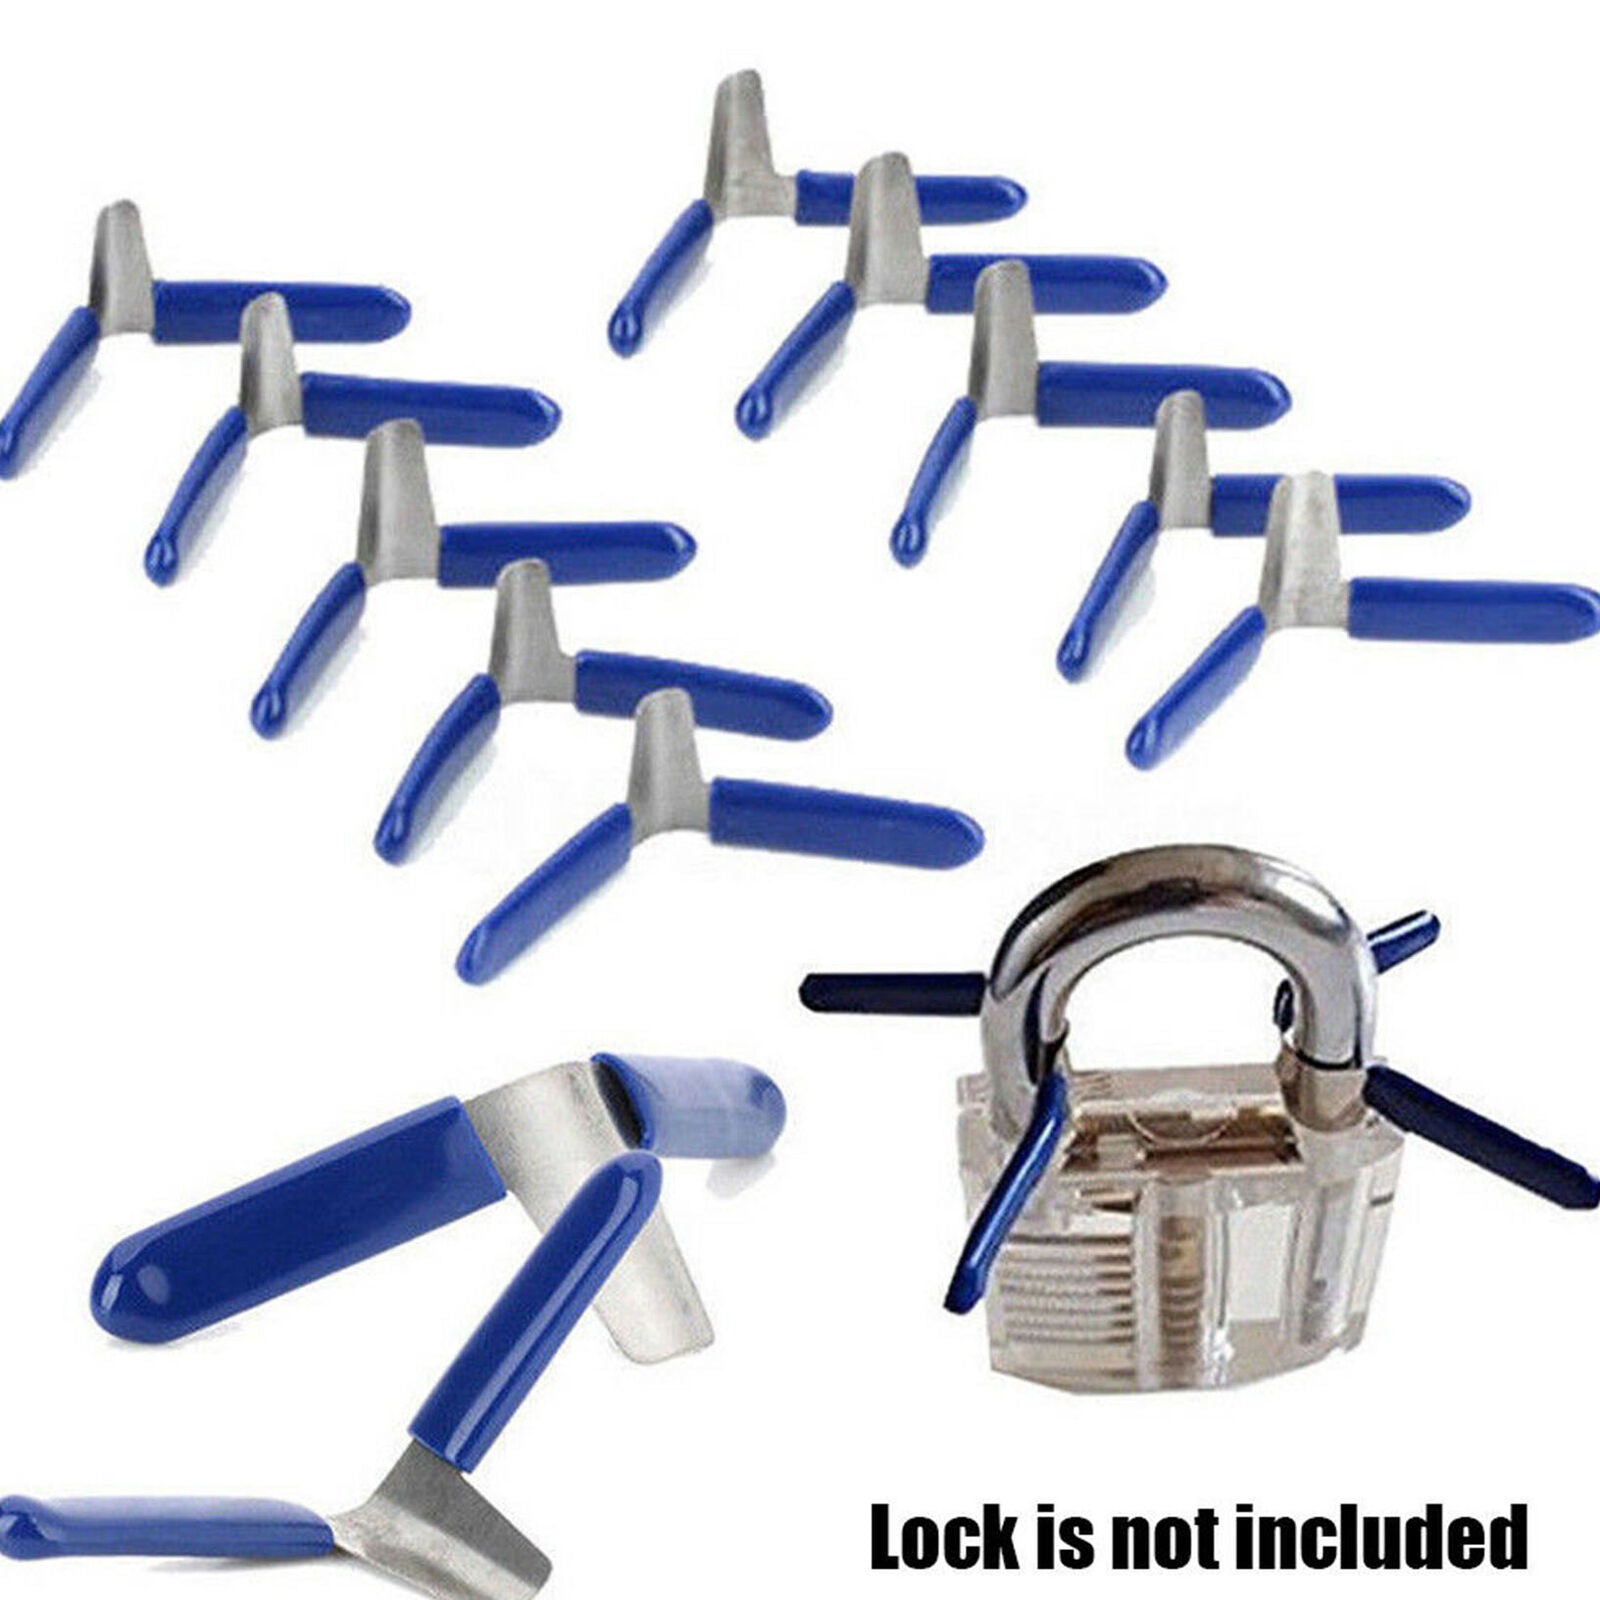 10PCS Padlock Shim Set Key Unlocking Accessories Tool Kit Without Lock BLUE POW